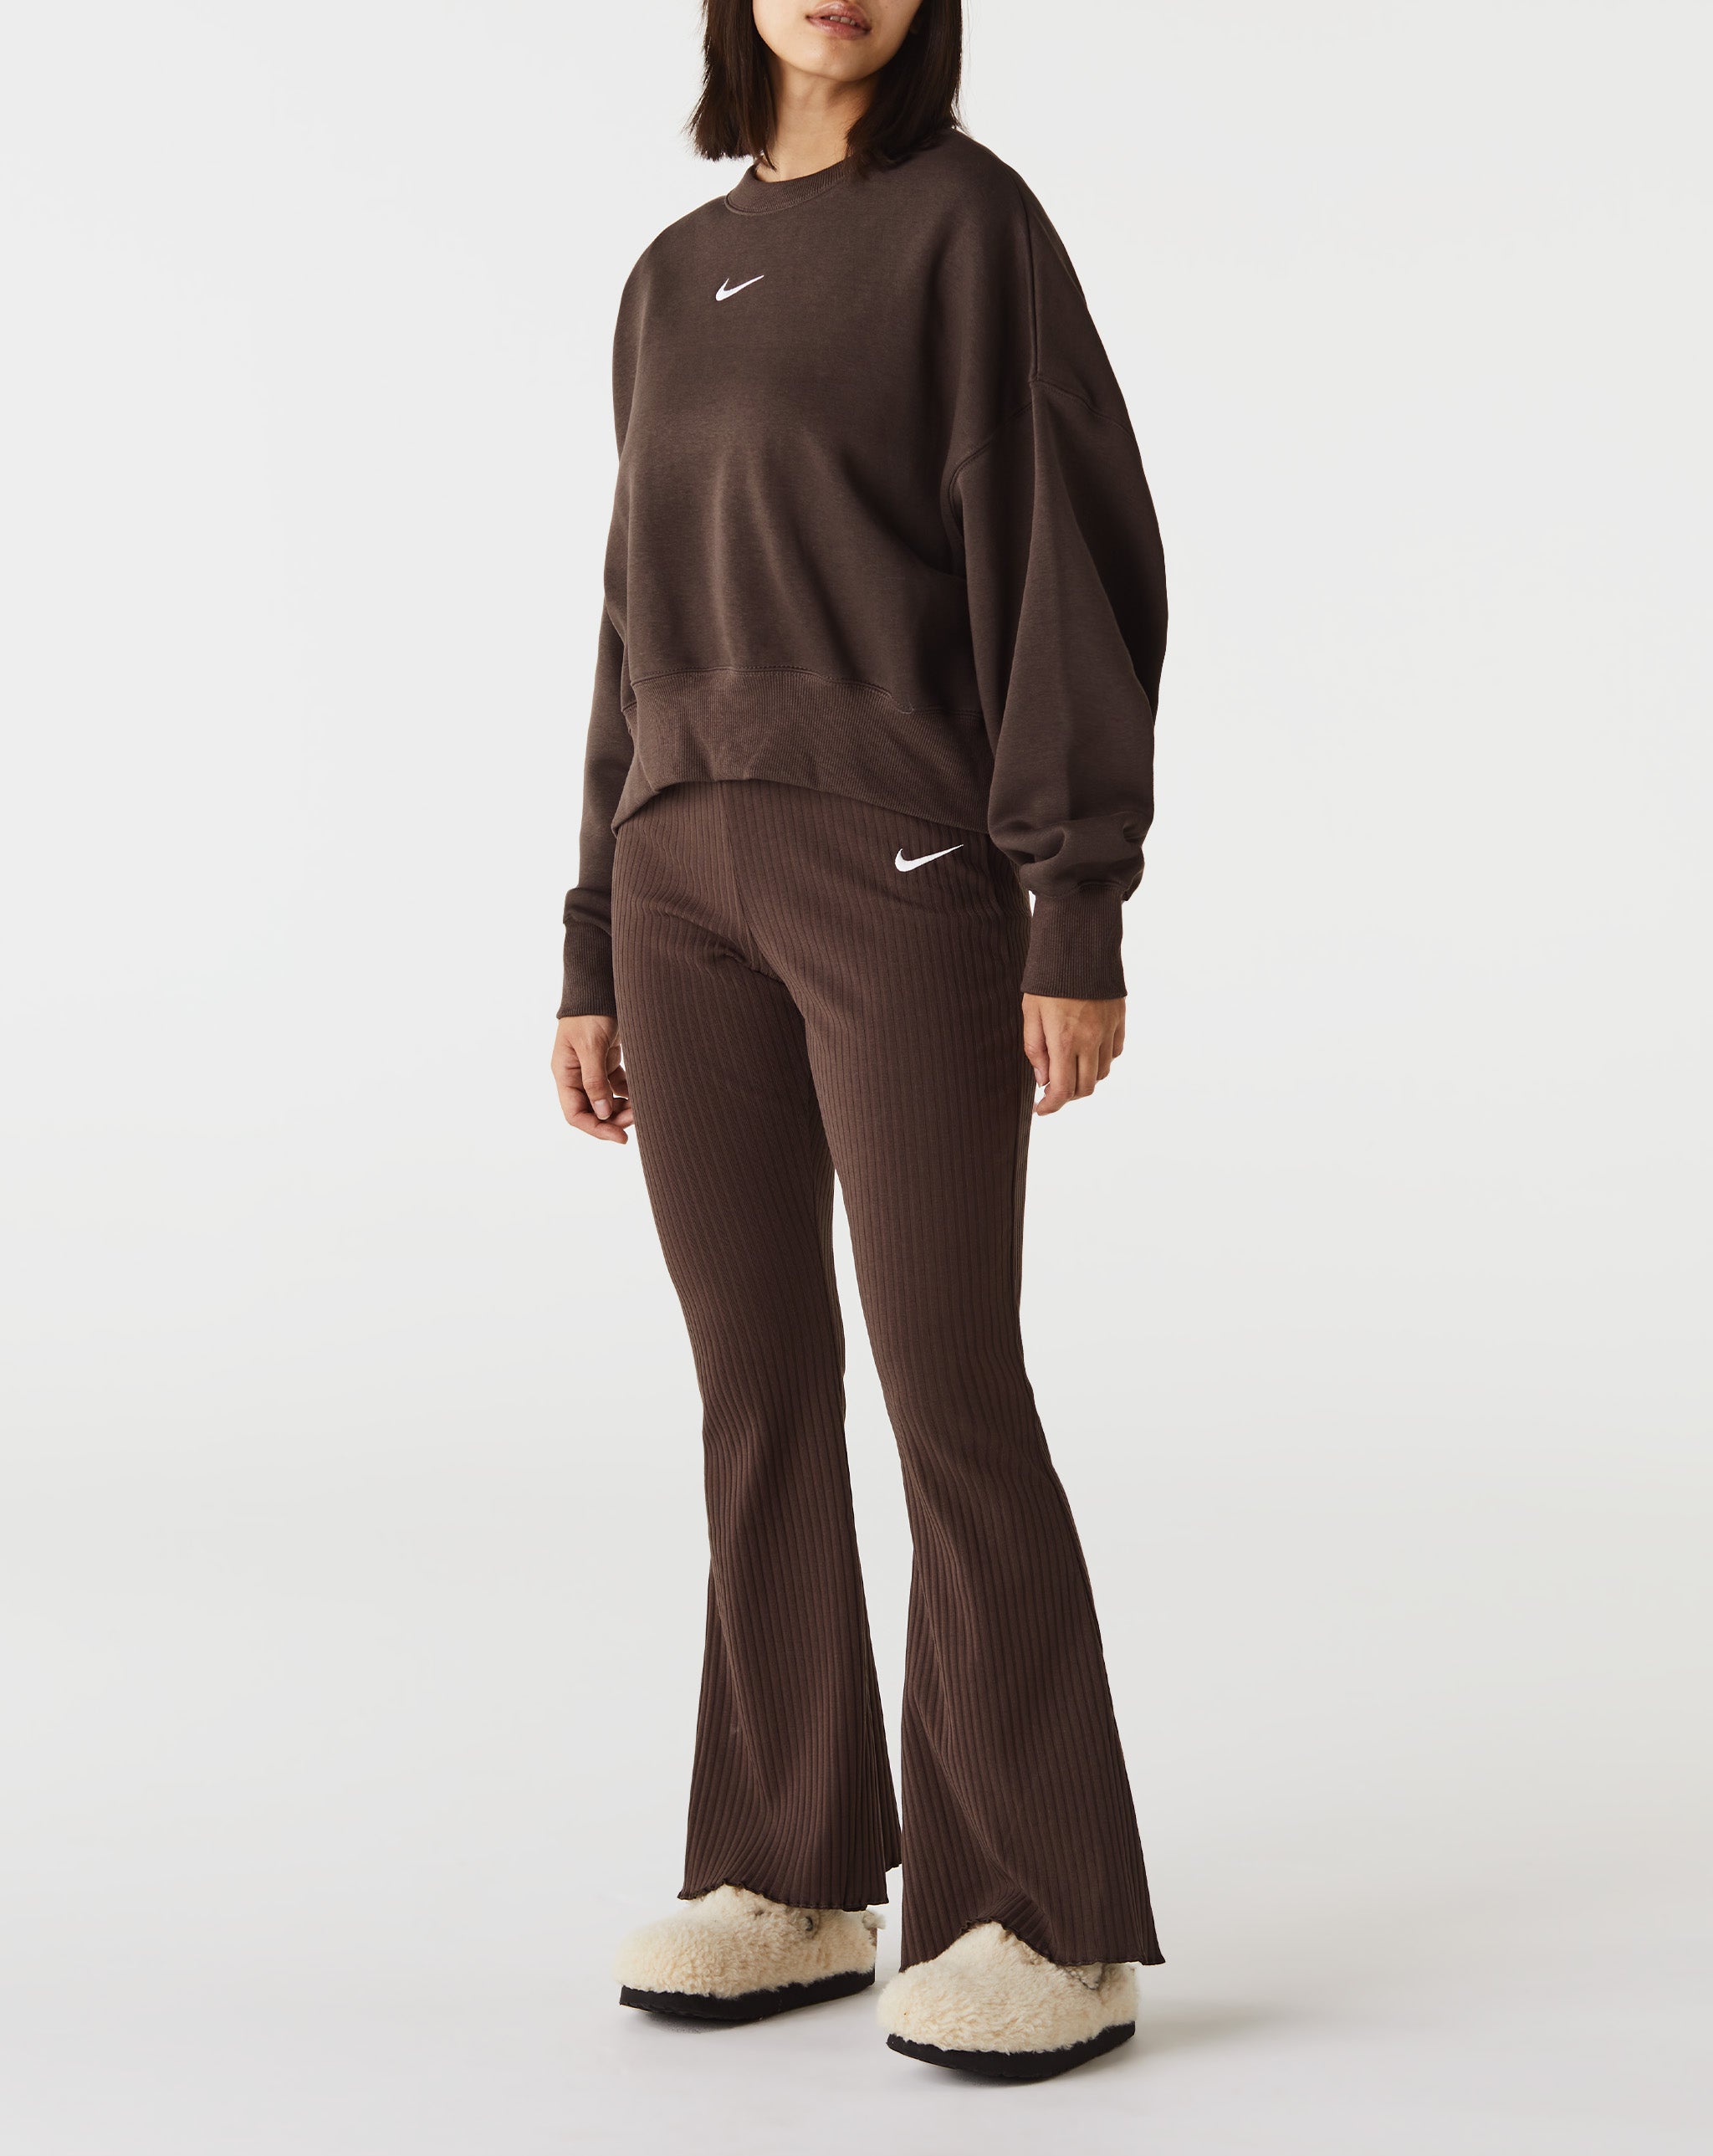 Nike Women's Phoenix Fleece Oversized Crewneck  - XHIBITION